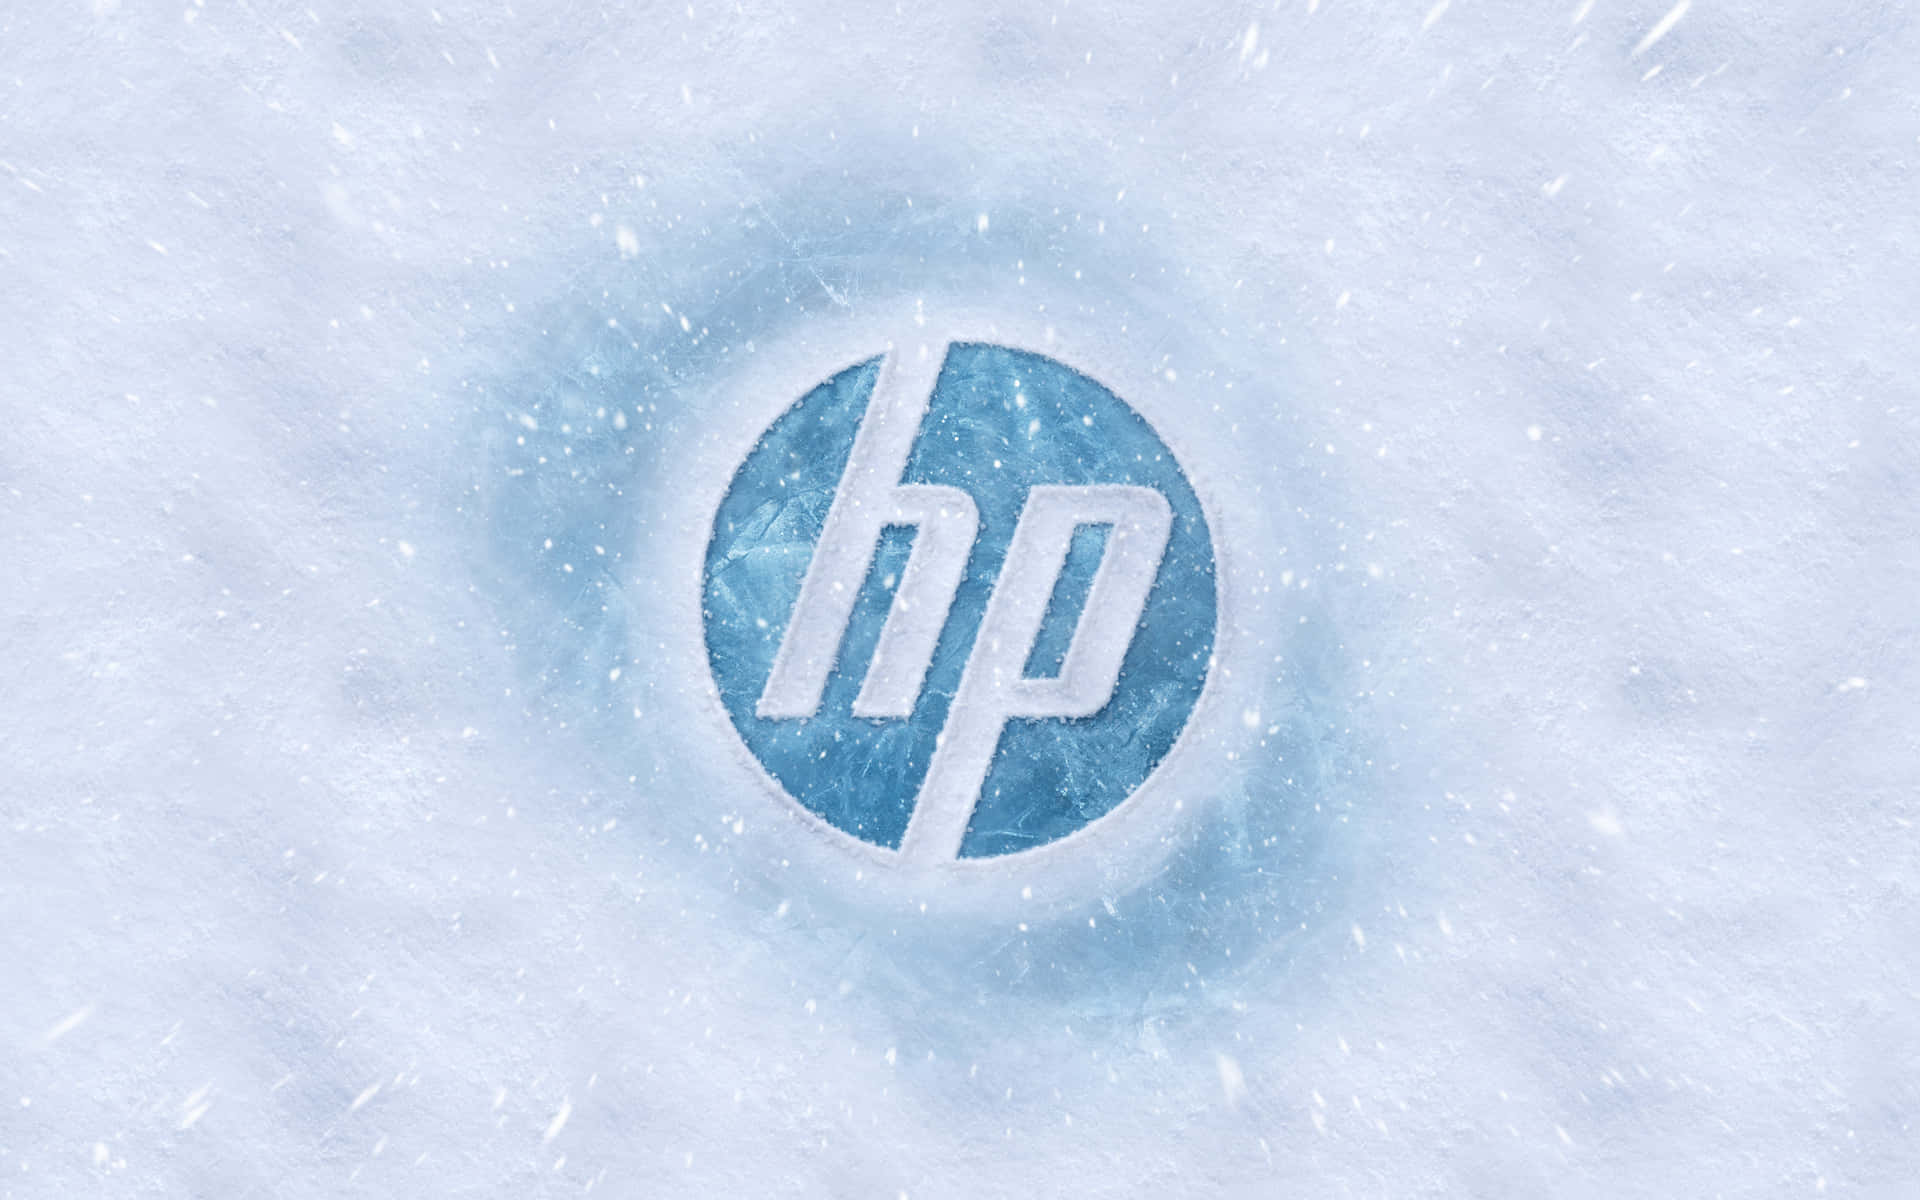 hp Probook Laptop Wallpapers HD hp Probook 1366x768 Backgrounds Free  Images Download